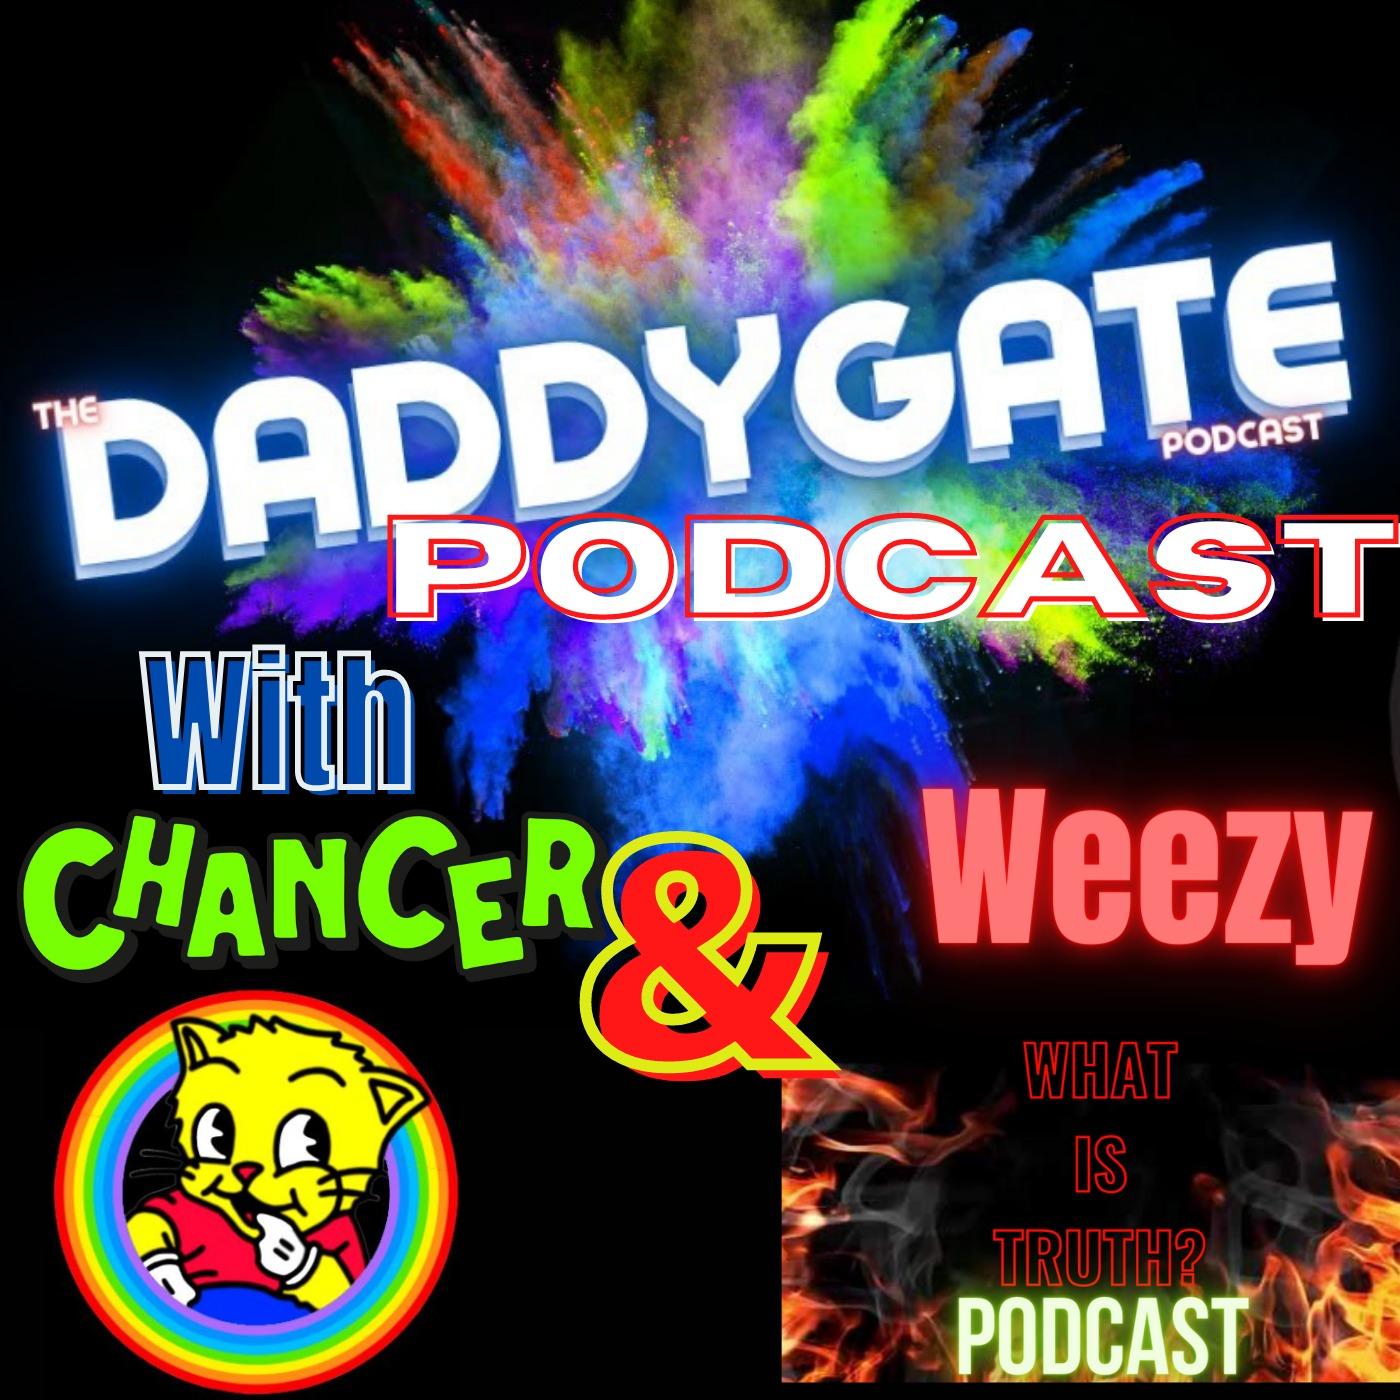 DaddyGate Podcast